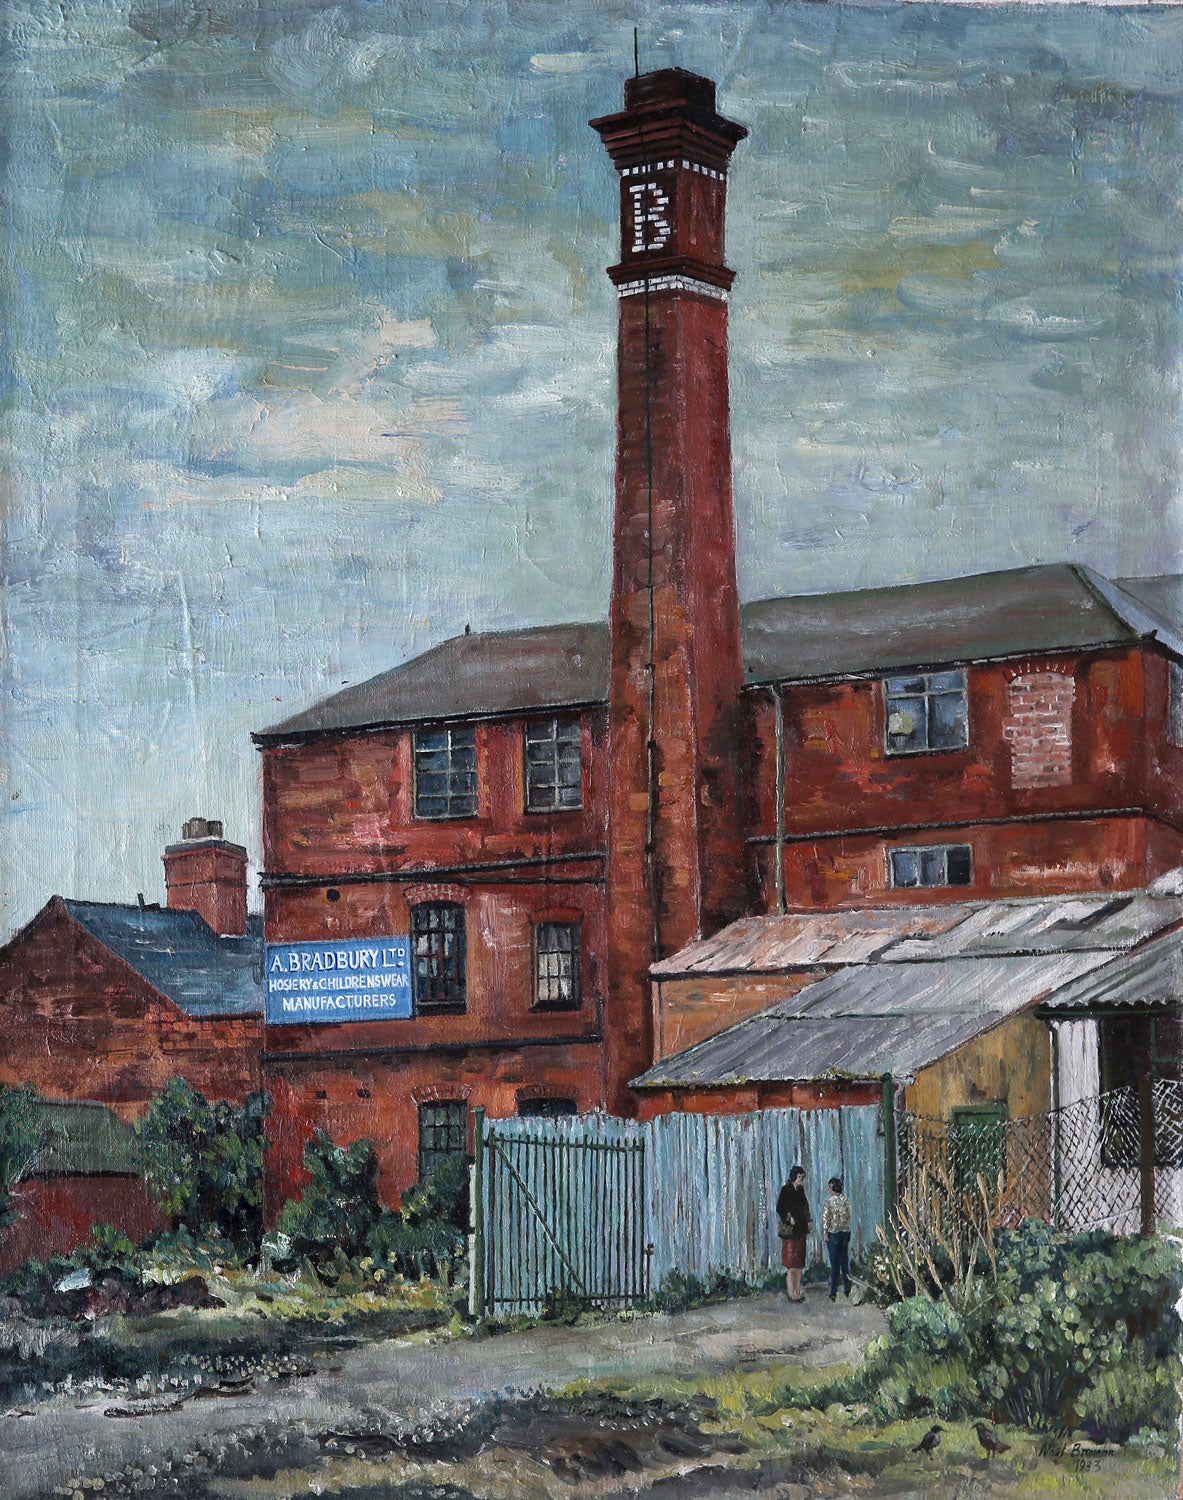 Bradbury's Factory, Earl Shilton